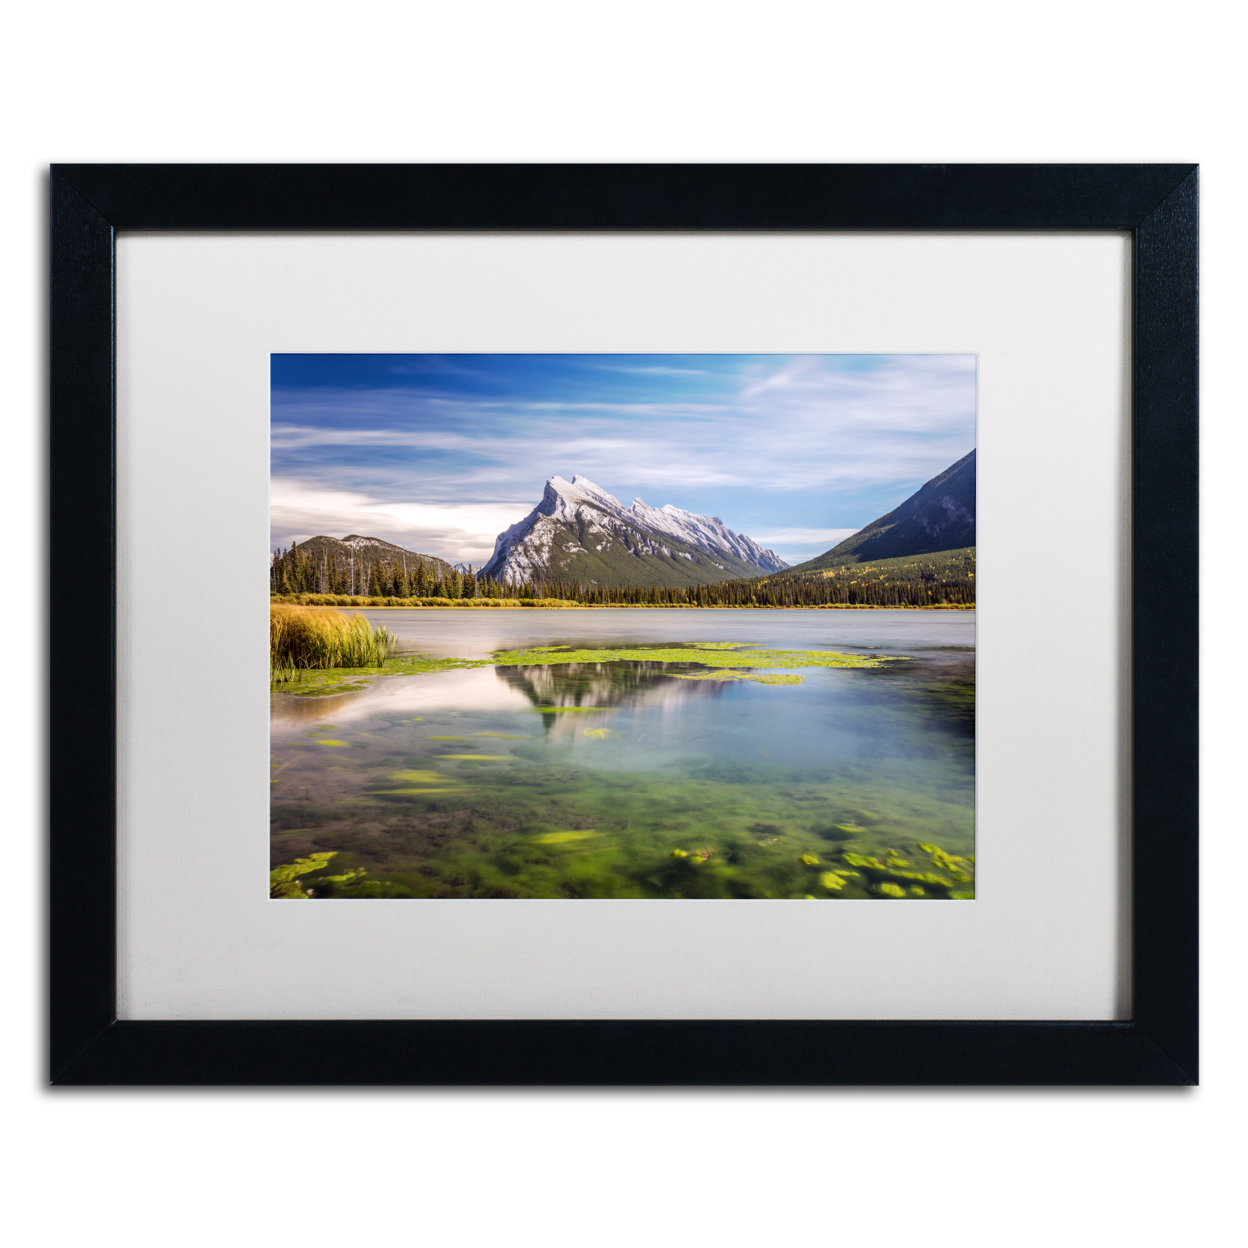 Pierre Leclerc 'Mount Rundle Banff' Black Wooden Framed Art 18 X 22 Inches